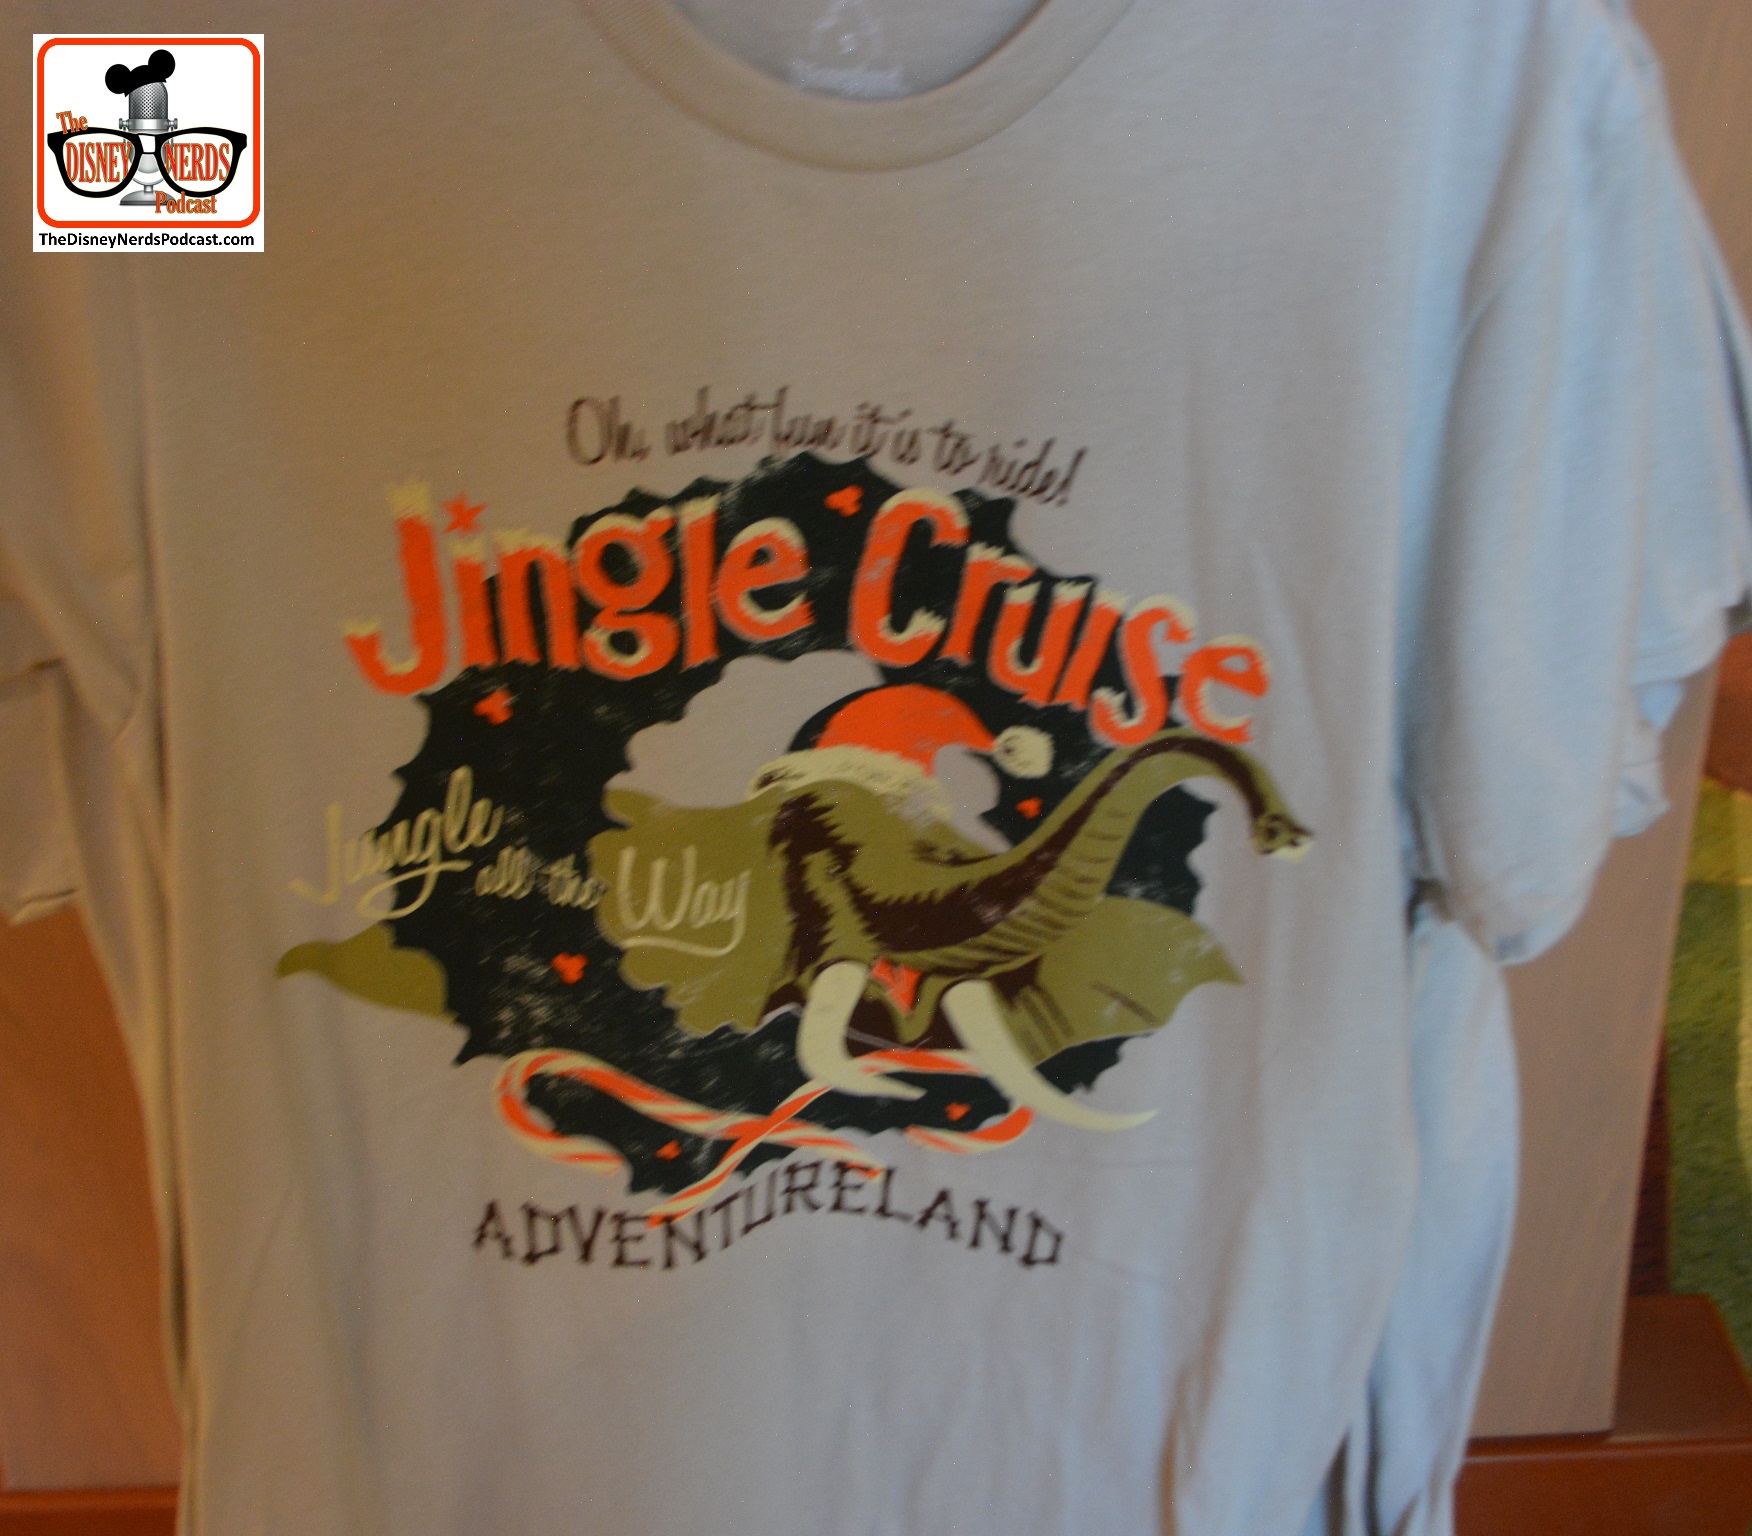 Jingle Cruise T-Shirt at World of Disney